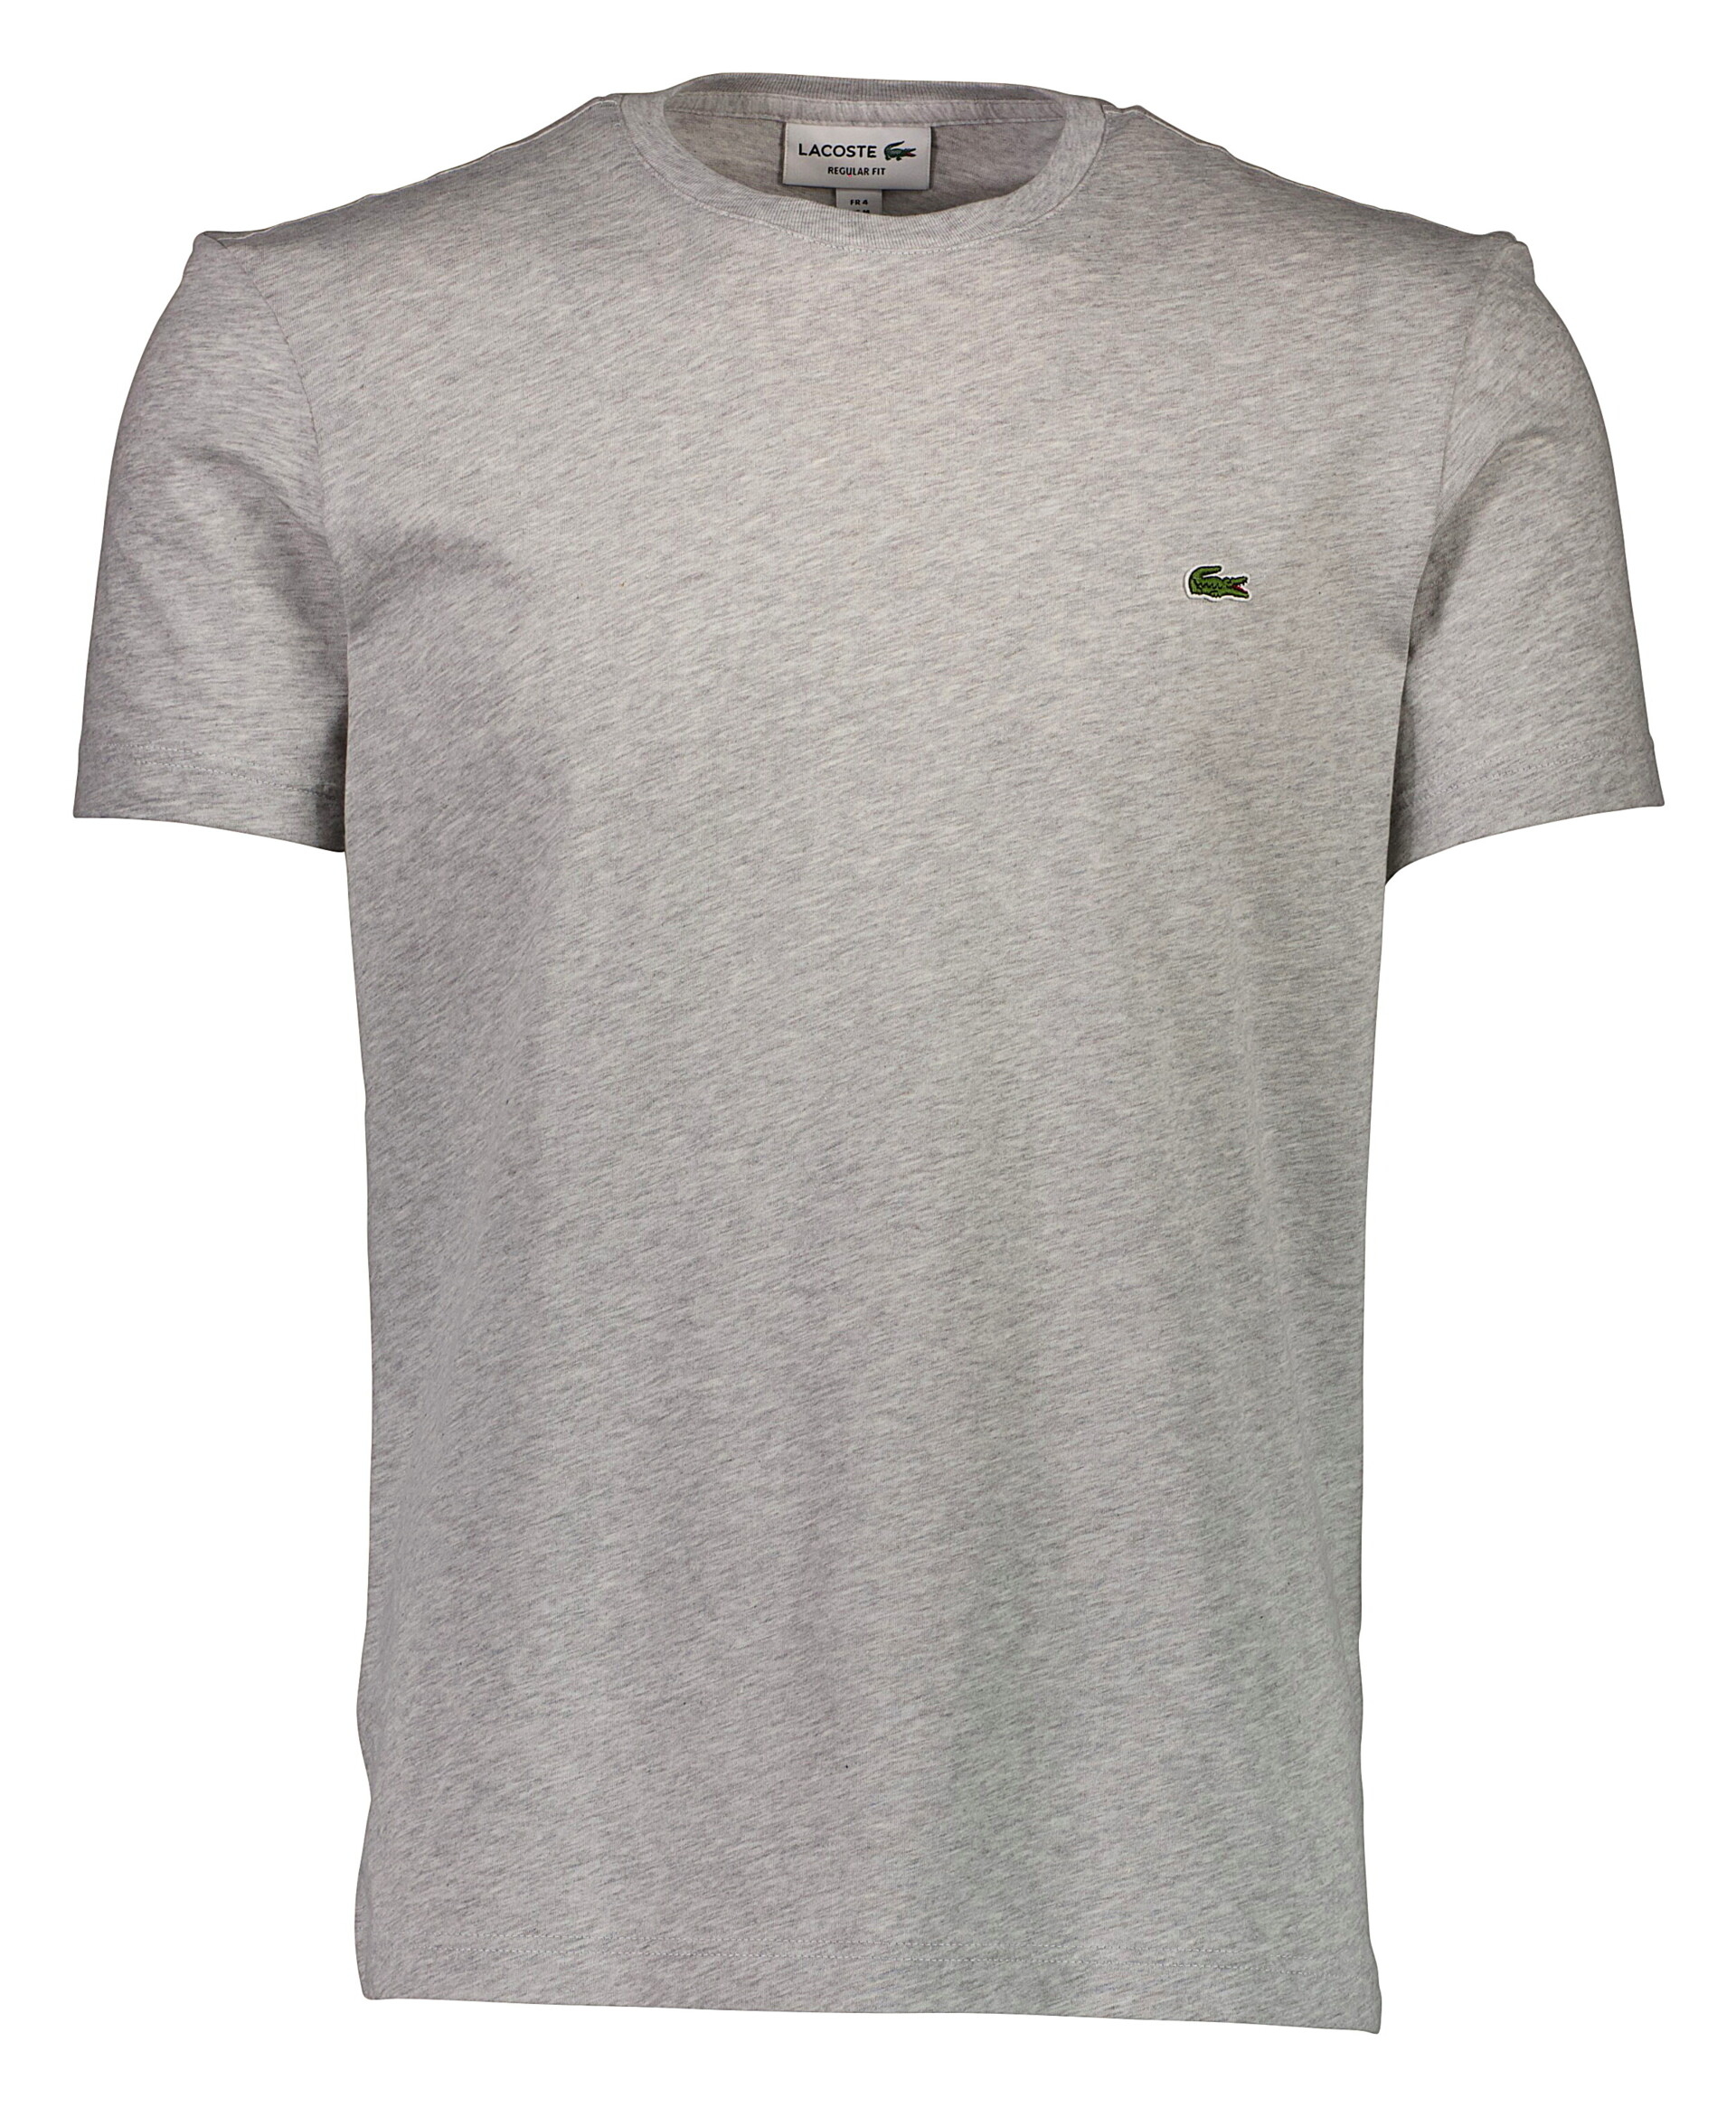 Lacoste T-shirt grå / cca argent